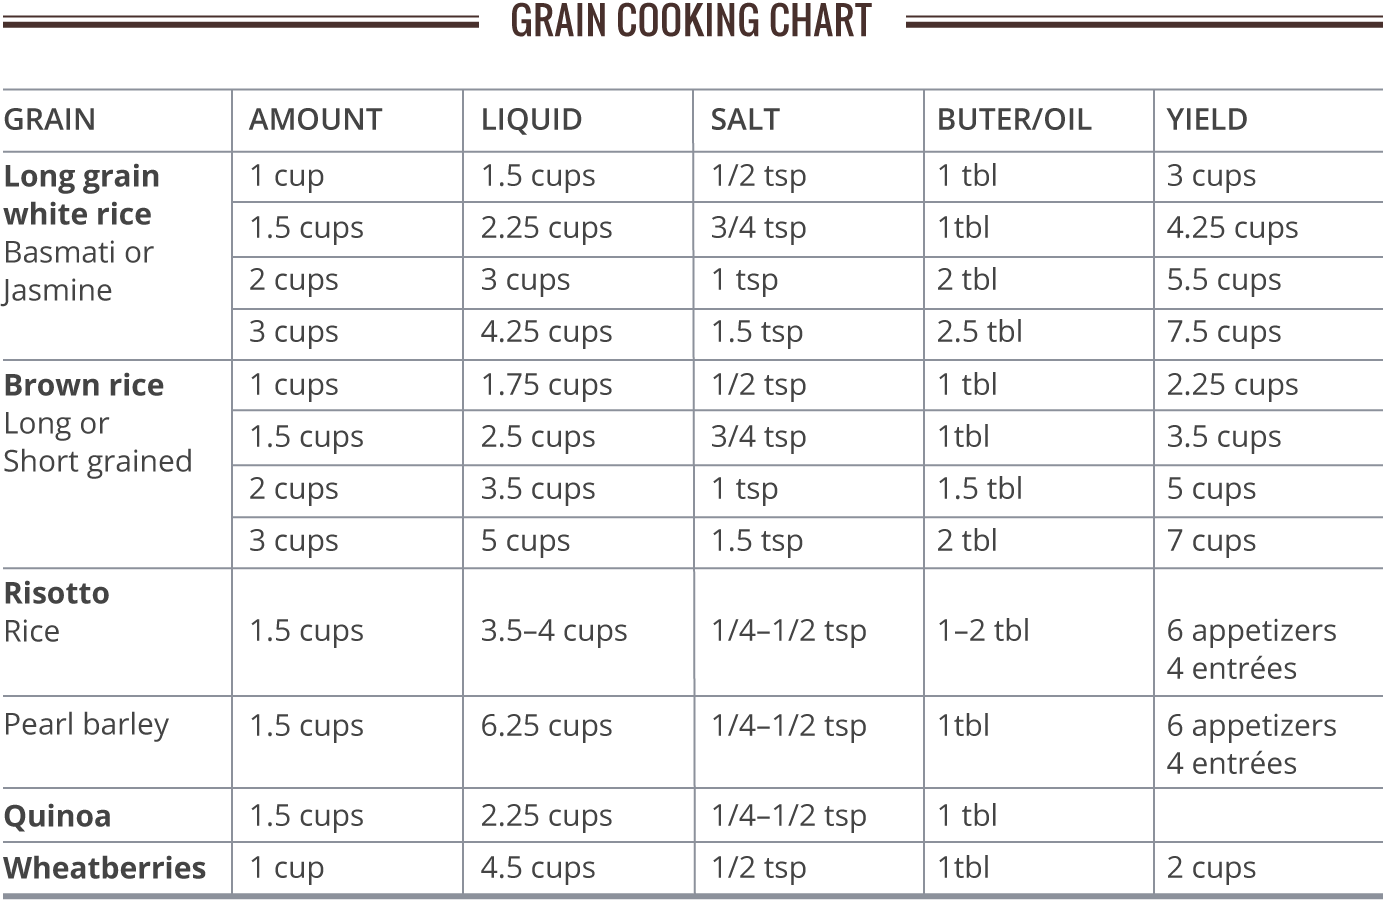 Grain Cooking Chart